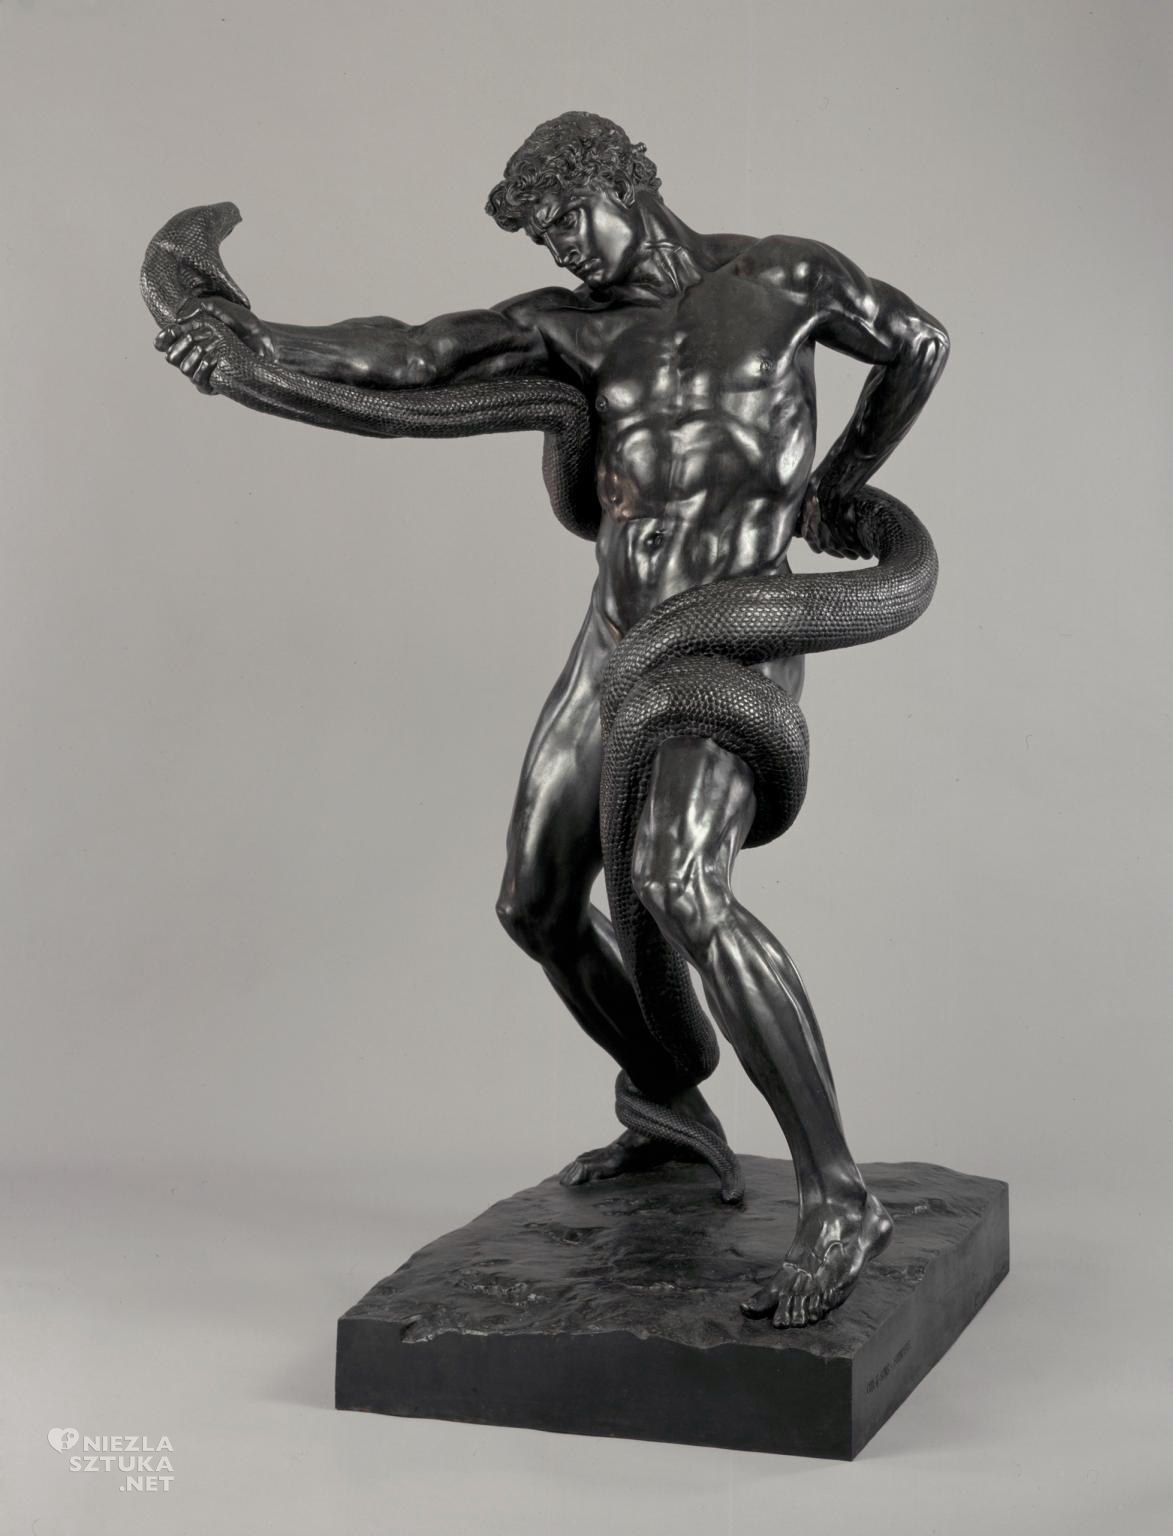 Frederic Leighton, Atleta walczący z pytonem, rzeźba, sztuka brytyjska, Niezła Sztuka